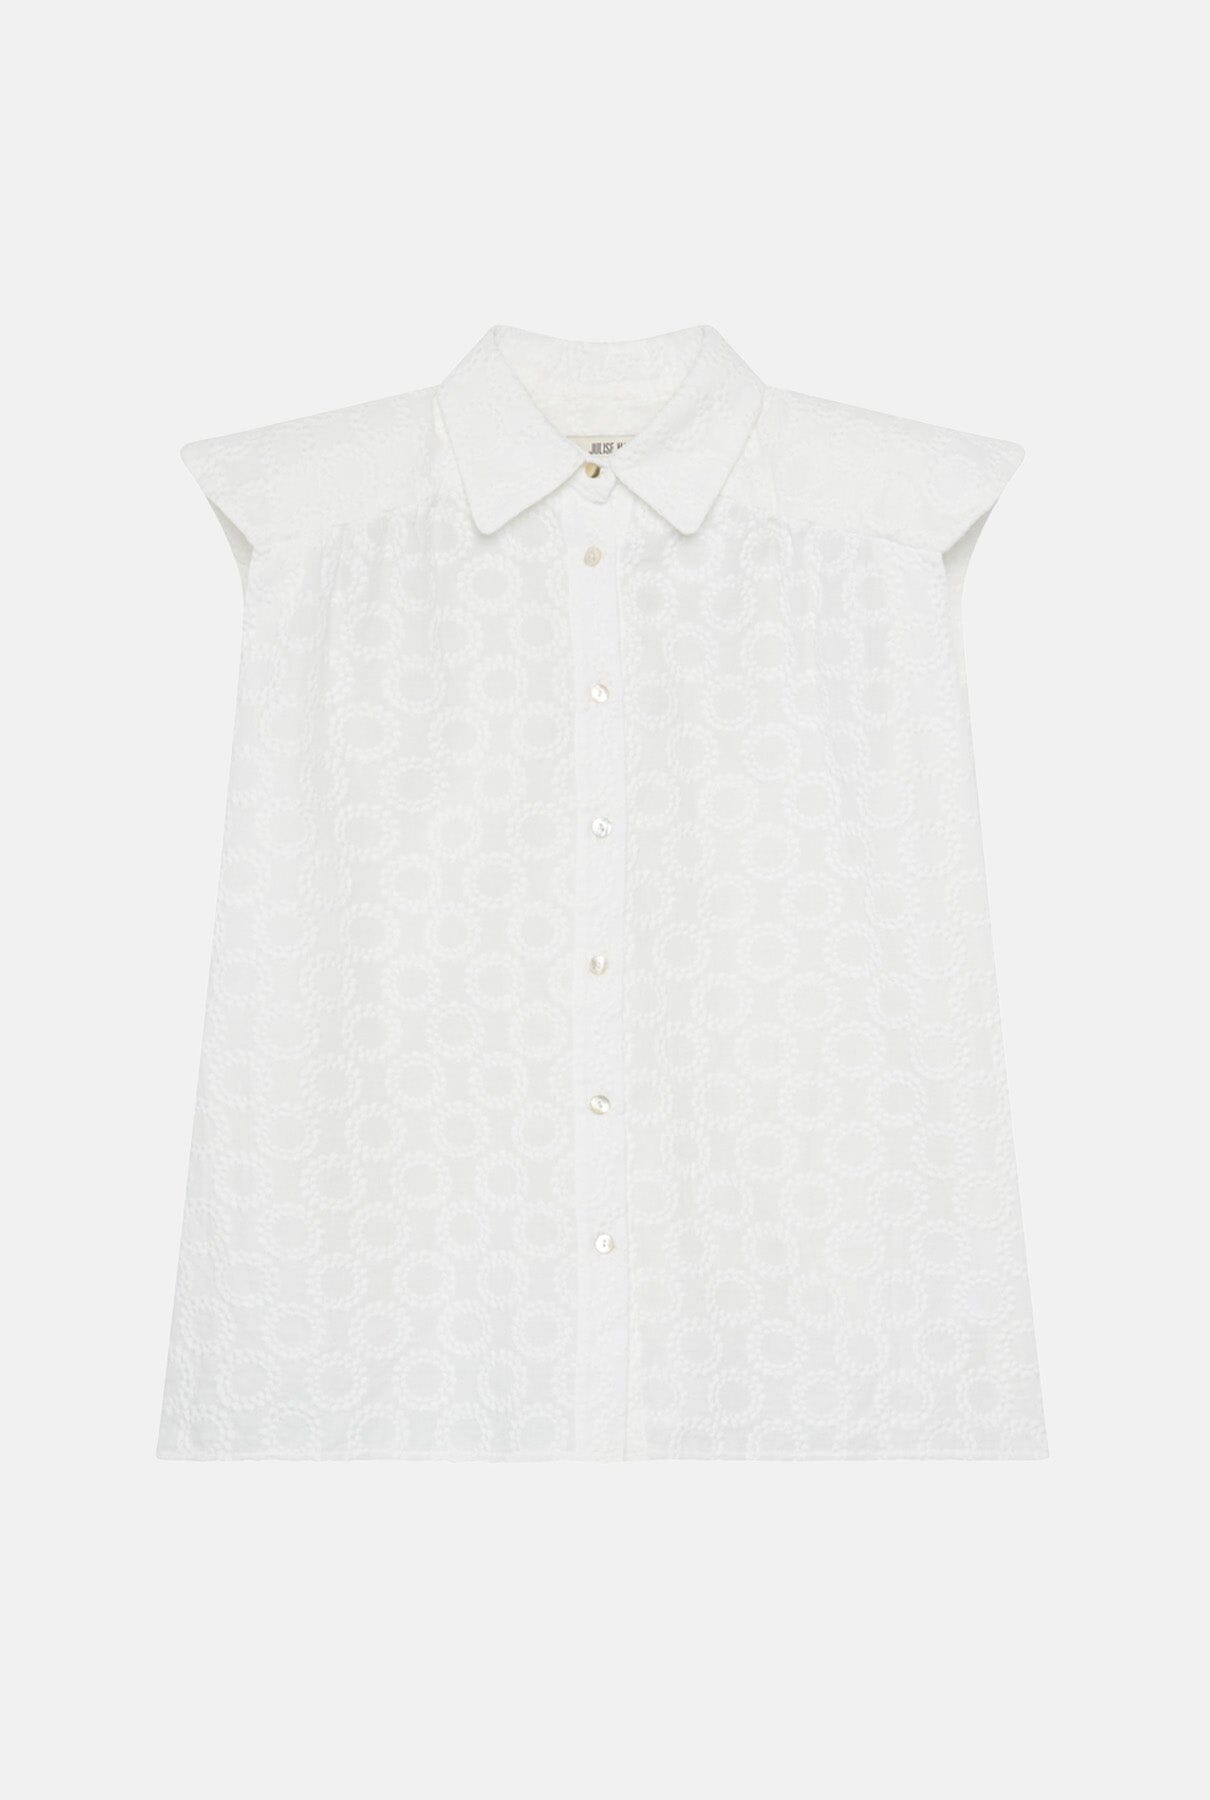 Miru Sleeveless Embroidery Shirts & blouses Julise Magon 